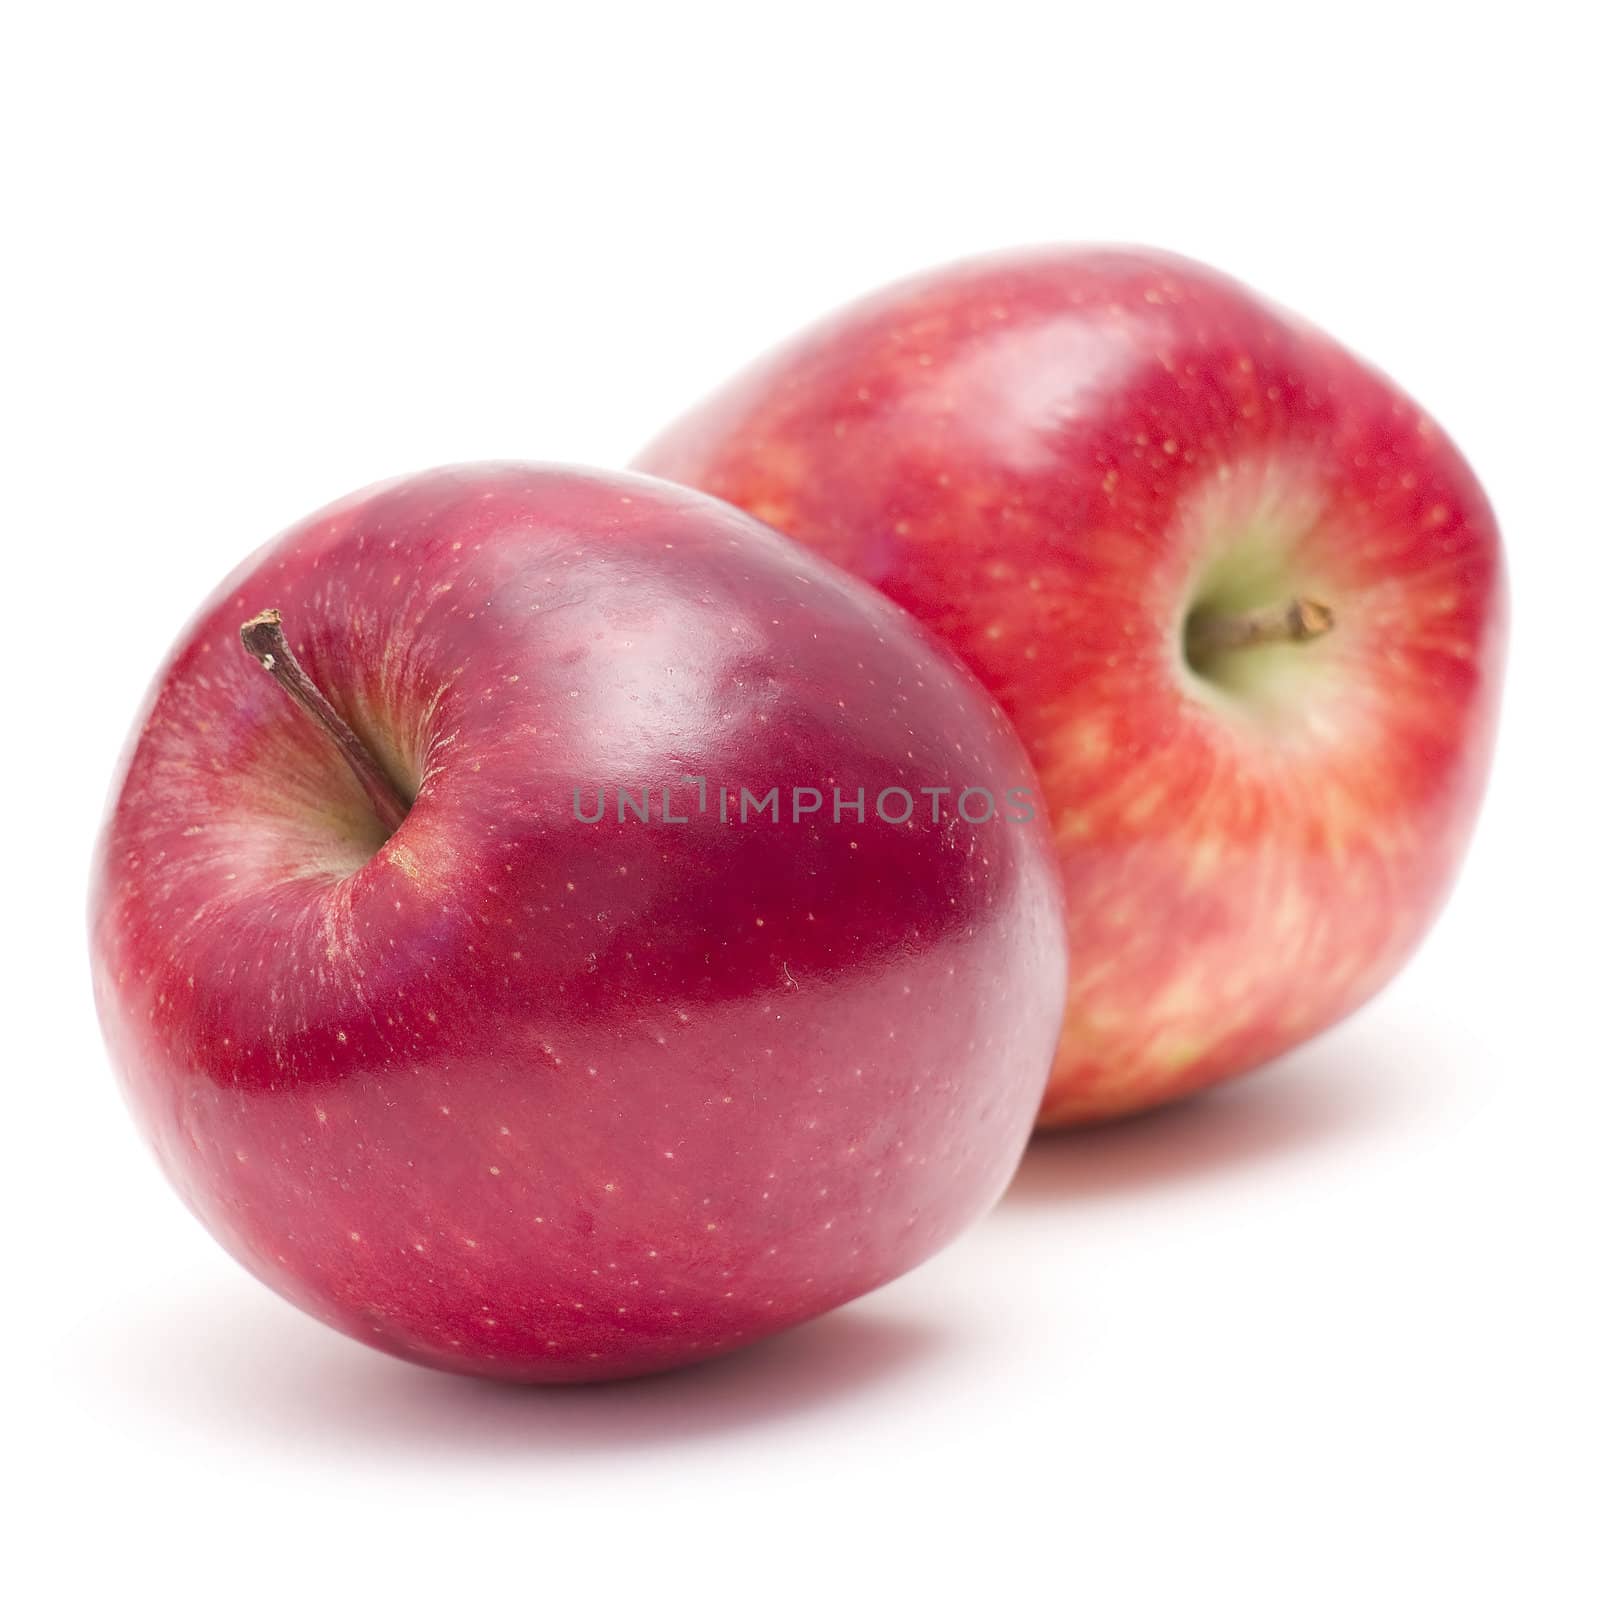 red apples by miradrozdowski